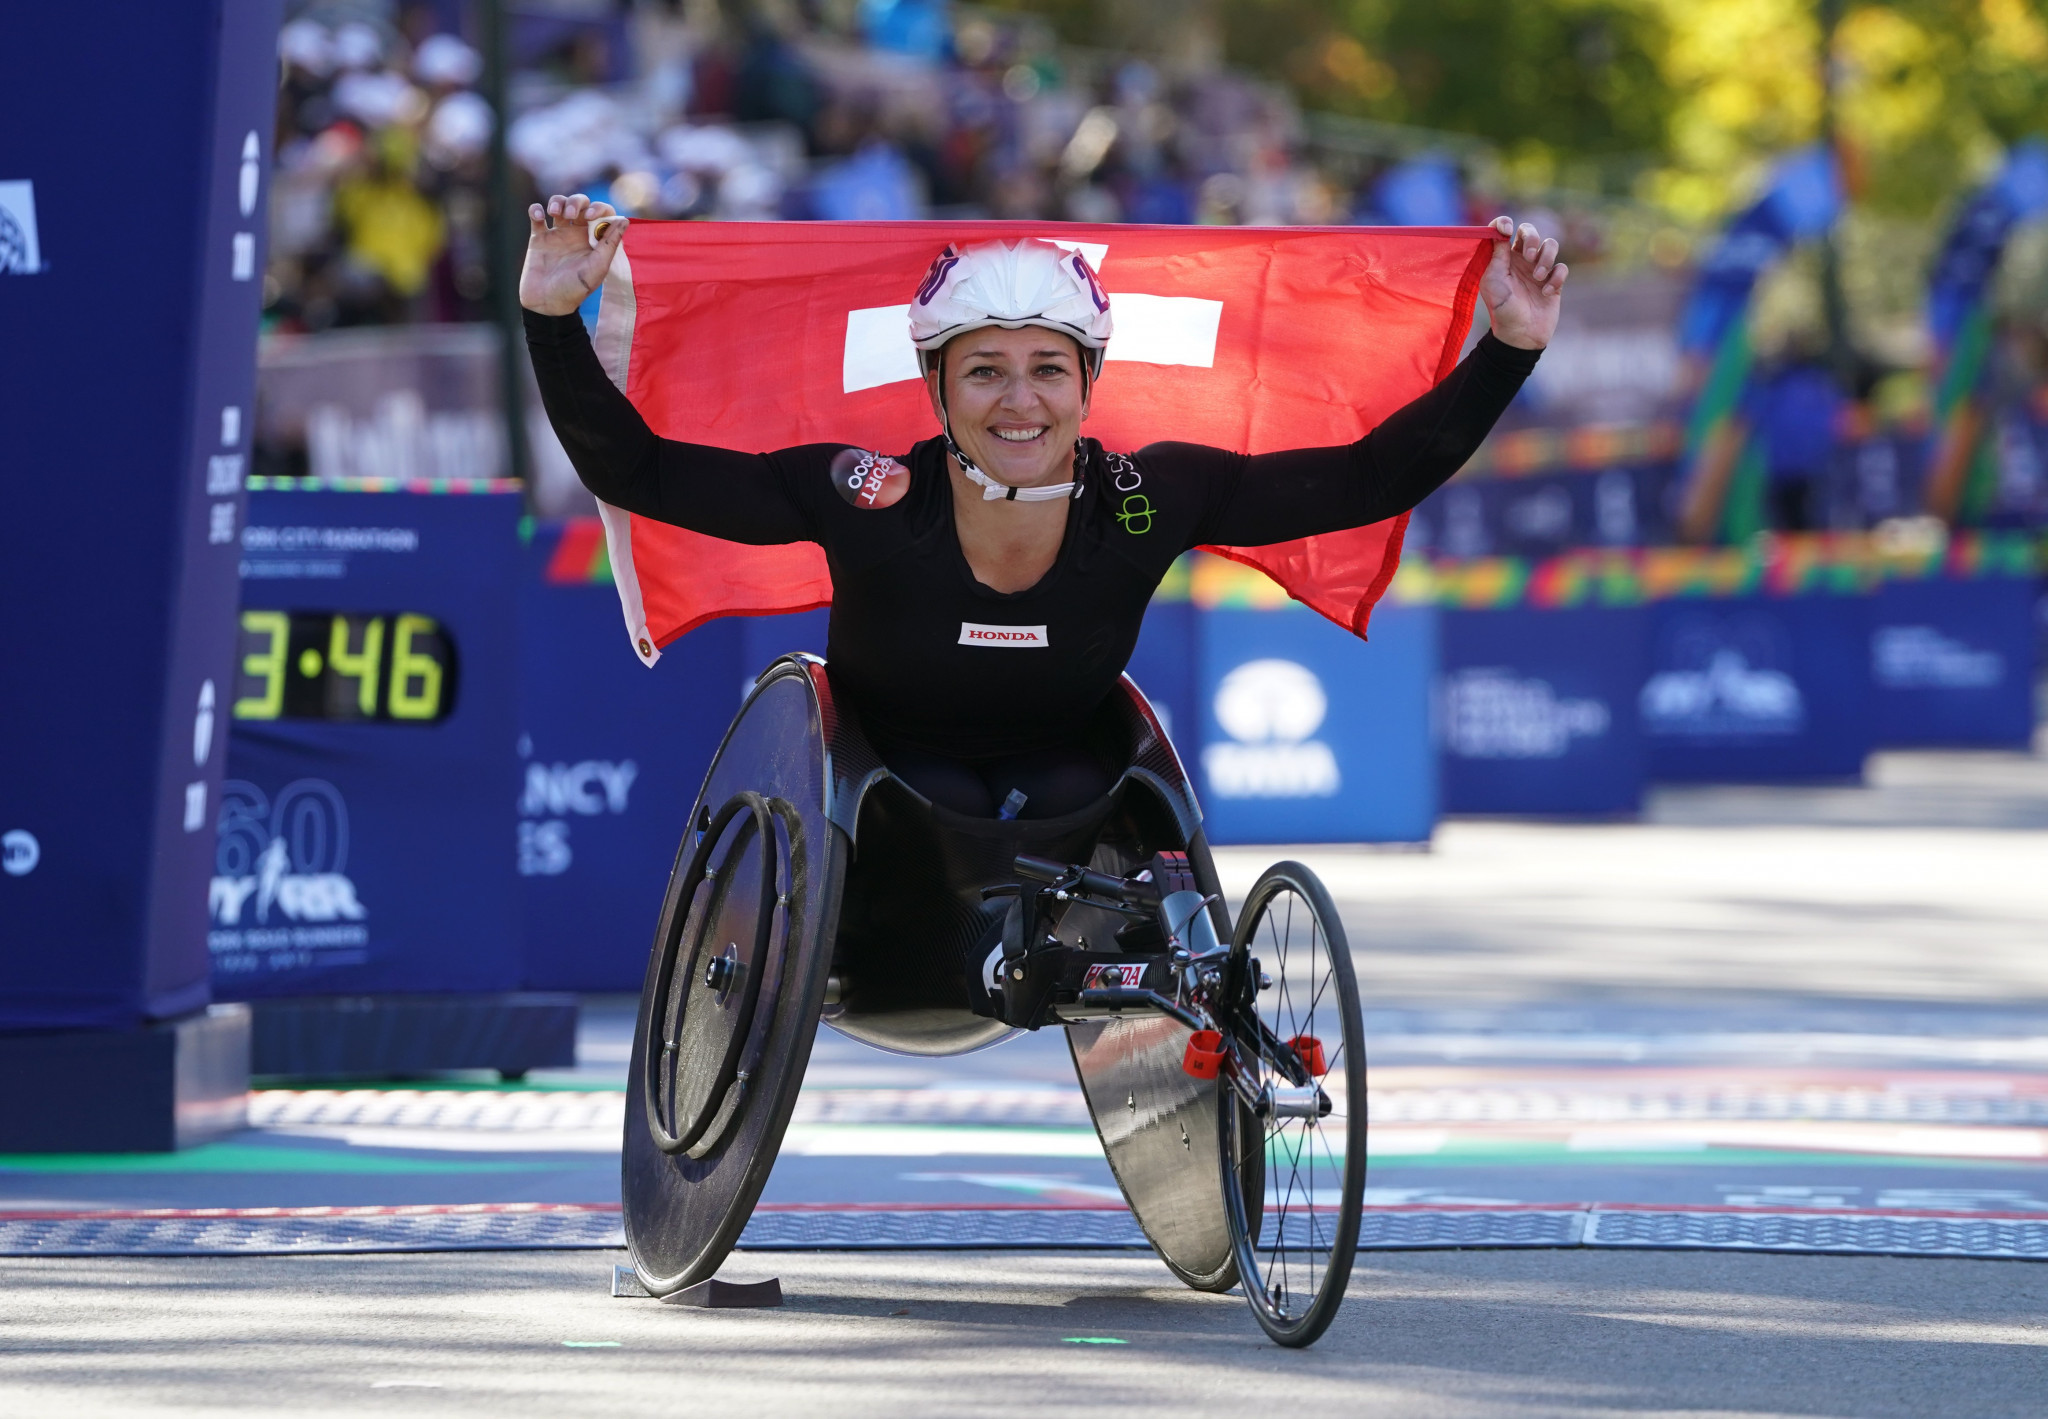 Defending champions Romanchuk and Schär to headline London Marathon wheelchair races